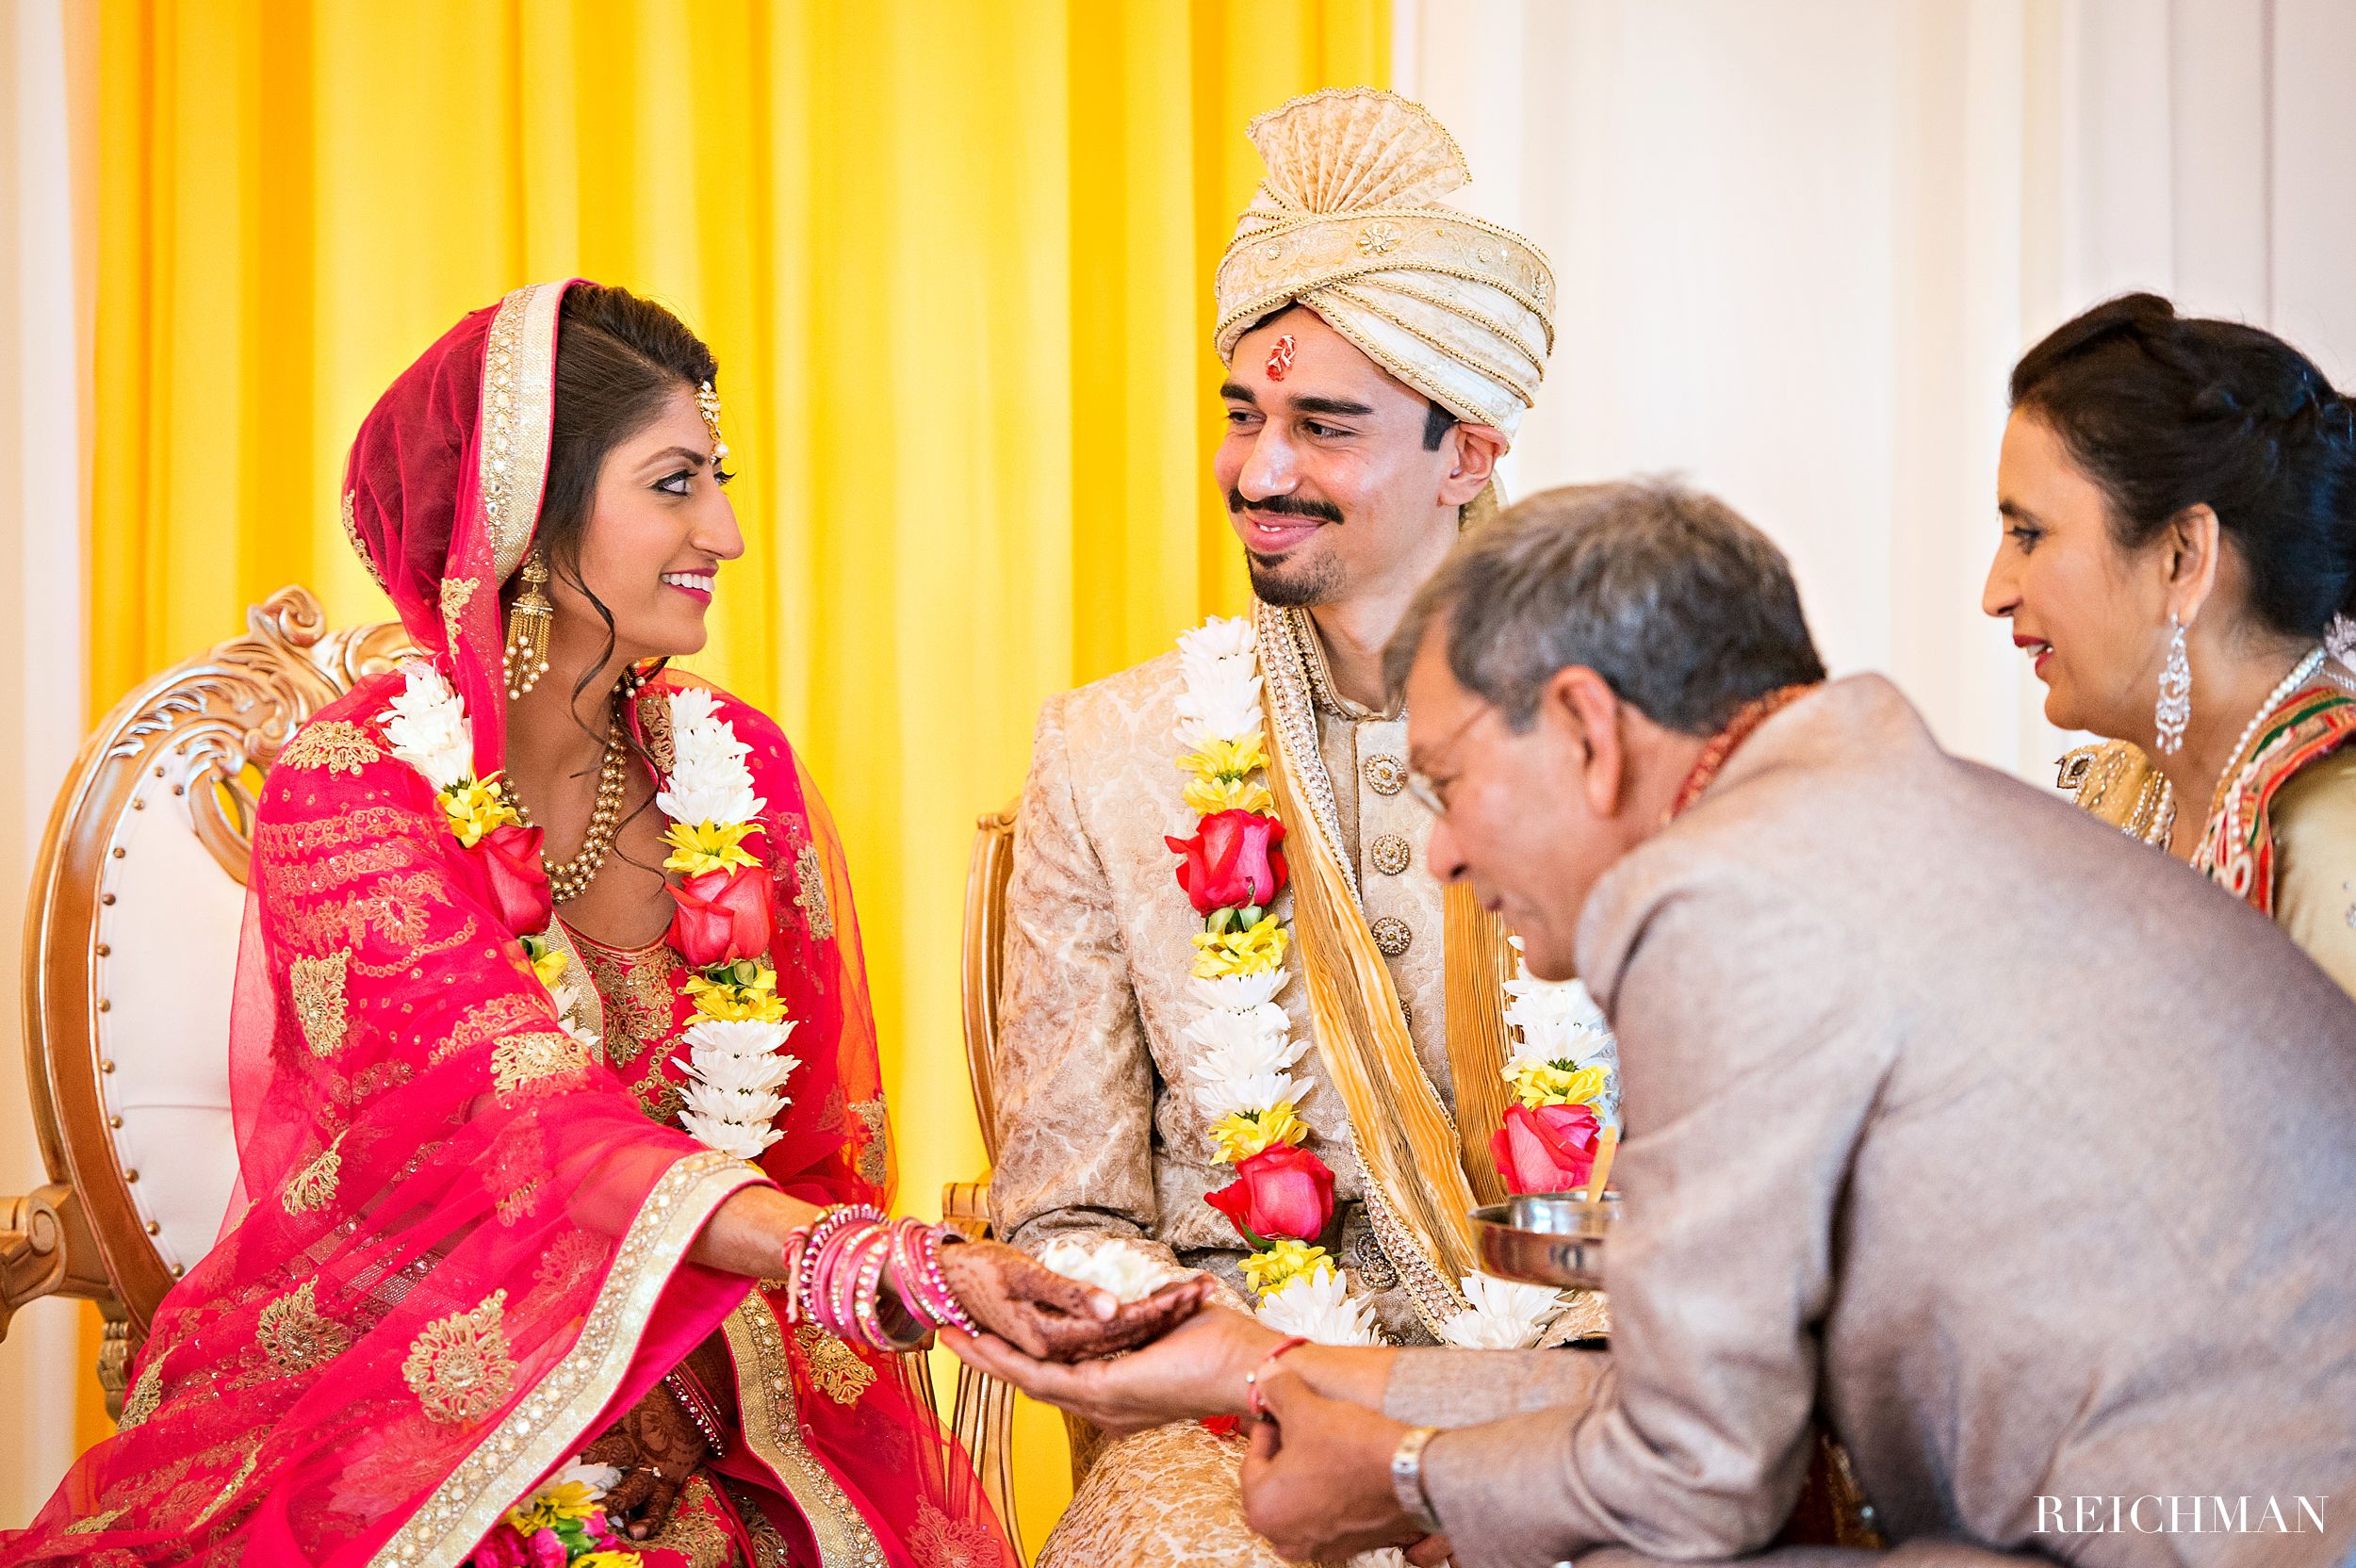 059st-regis-atlanta-hindu-wedding-059